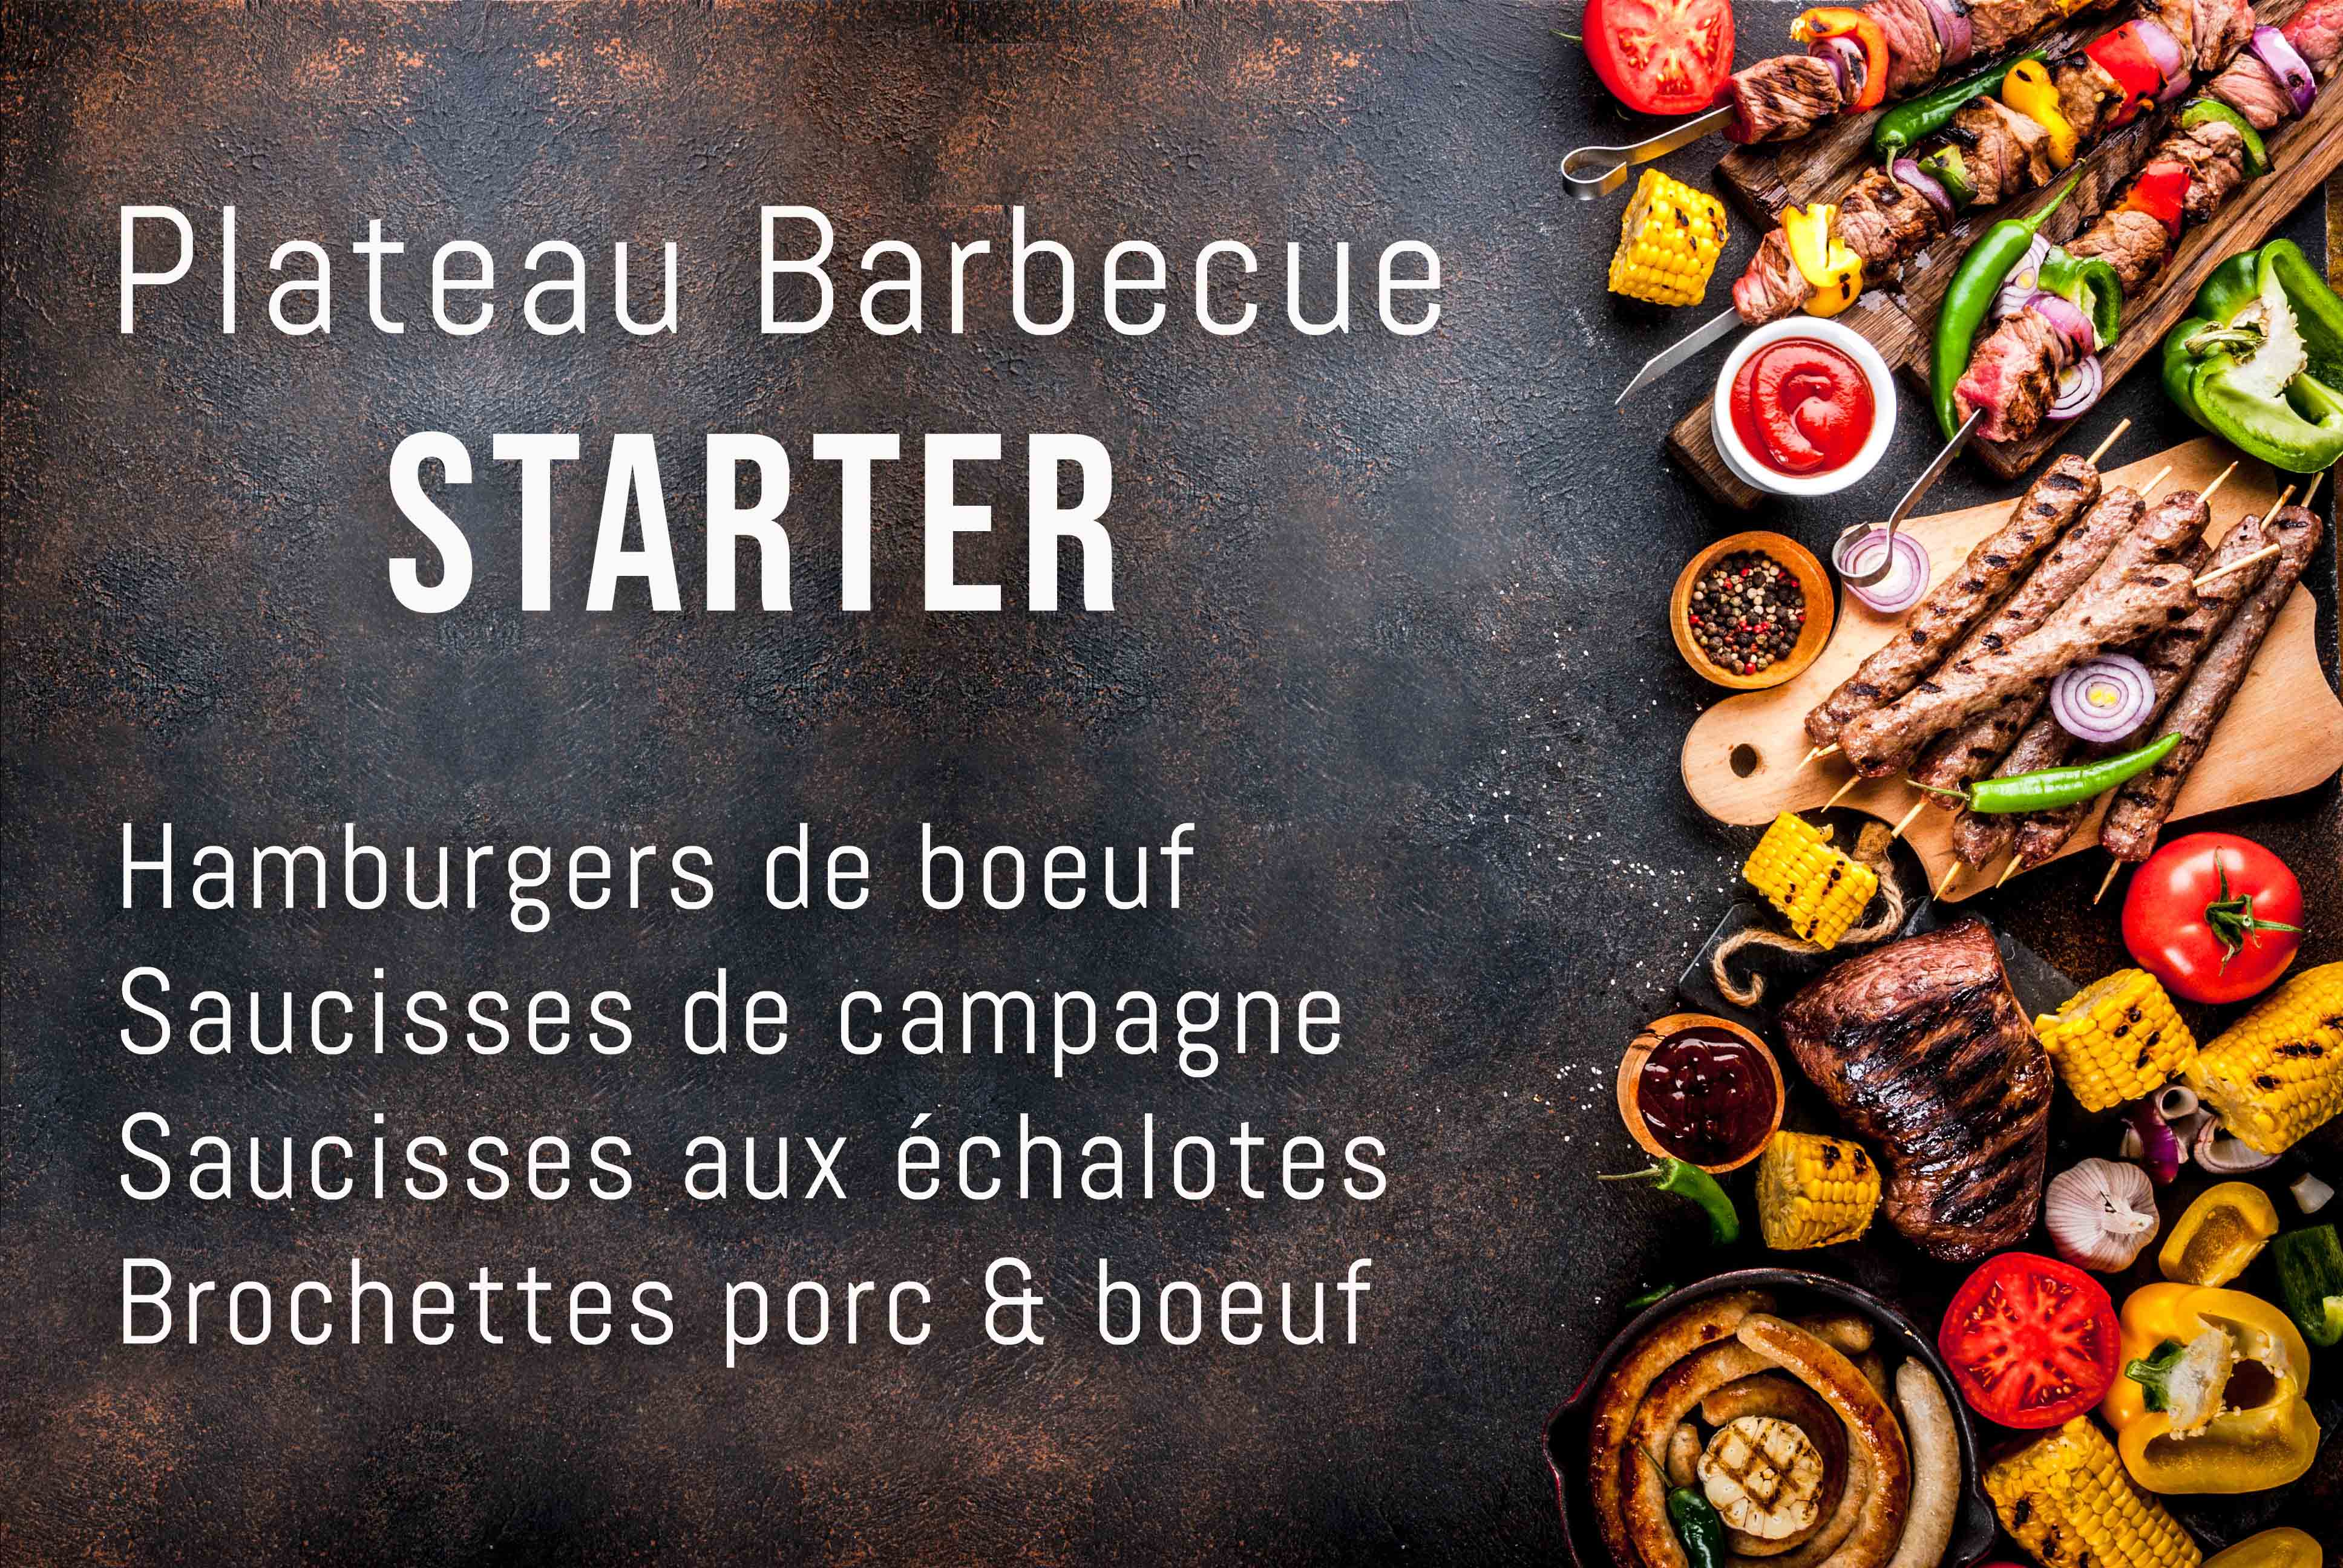 "Starter" Barbecue platter